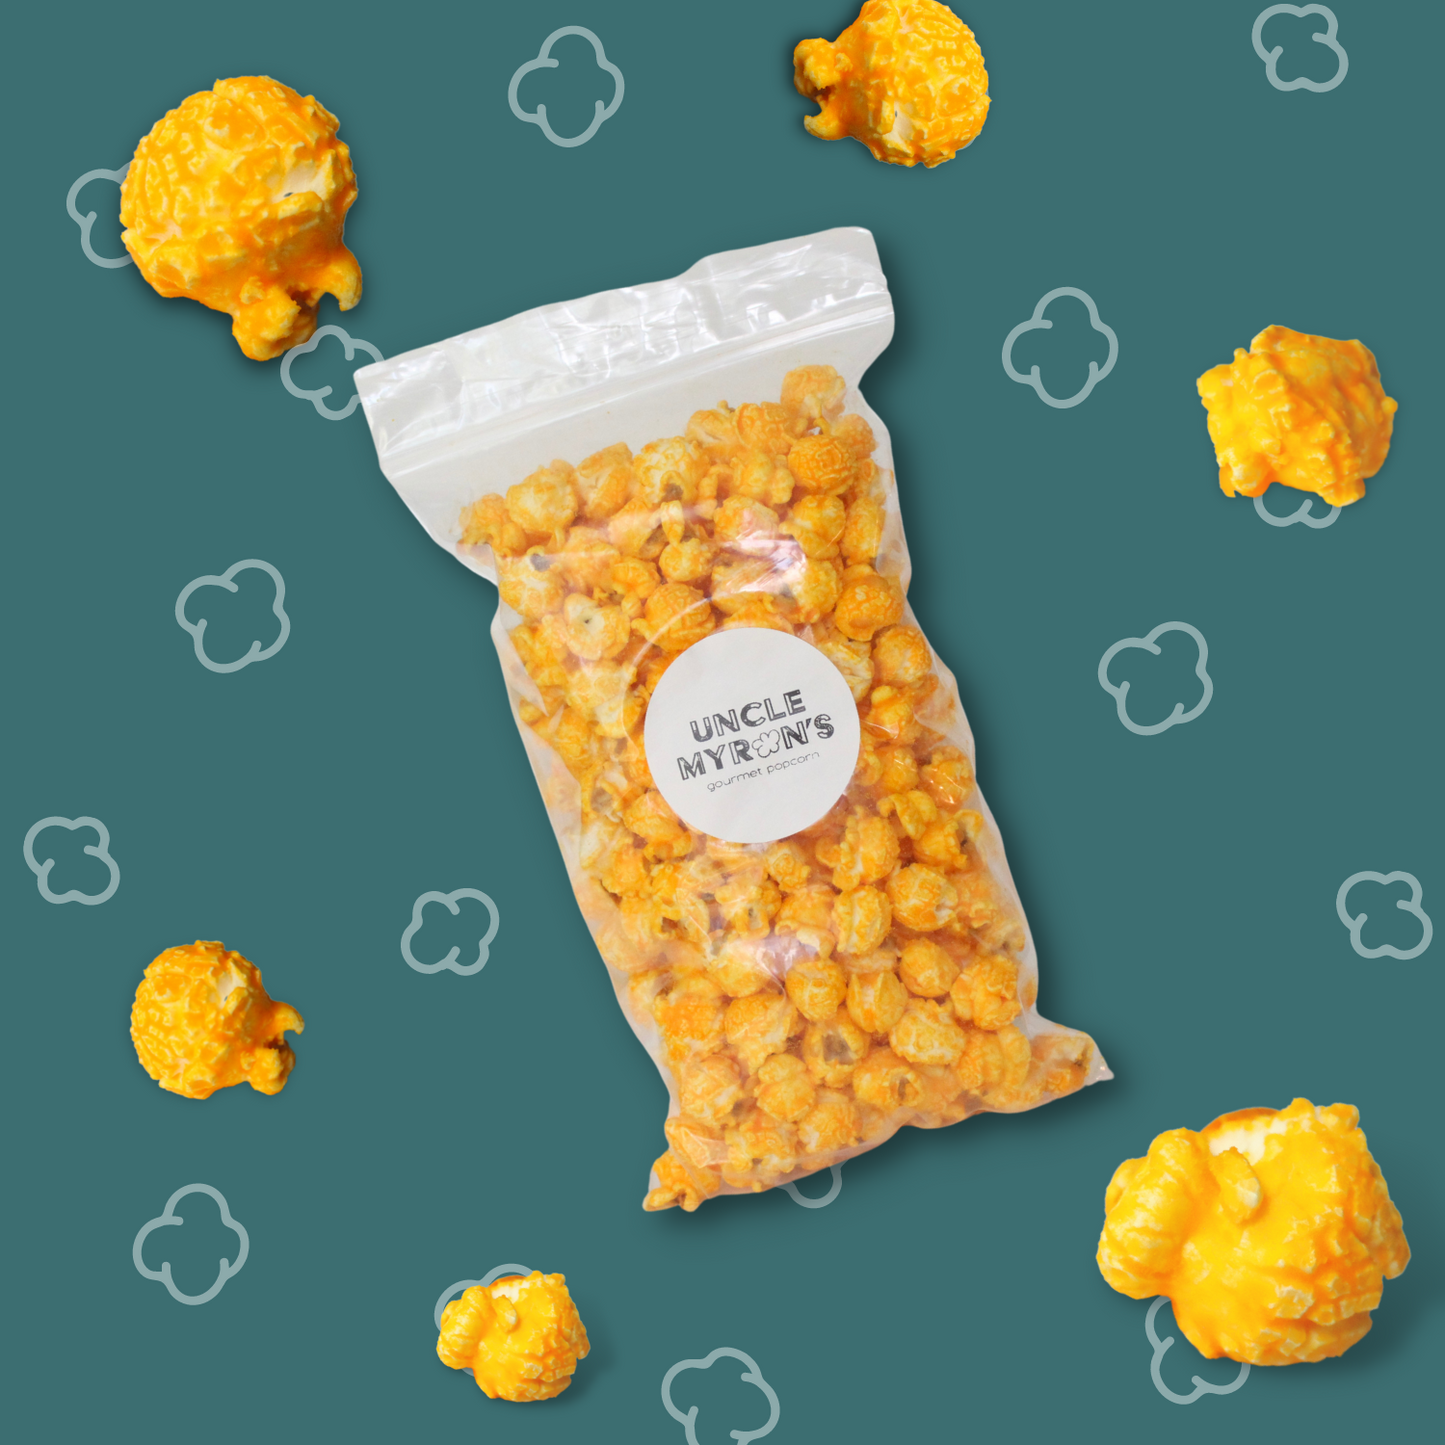 Uncle Myron's Popcorn 12 Bag Snack Box - 2 oz. Each